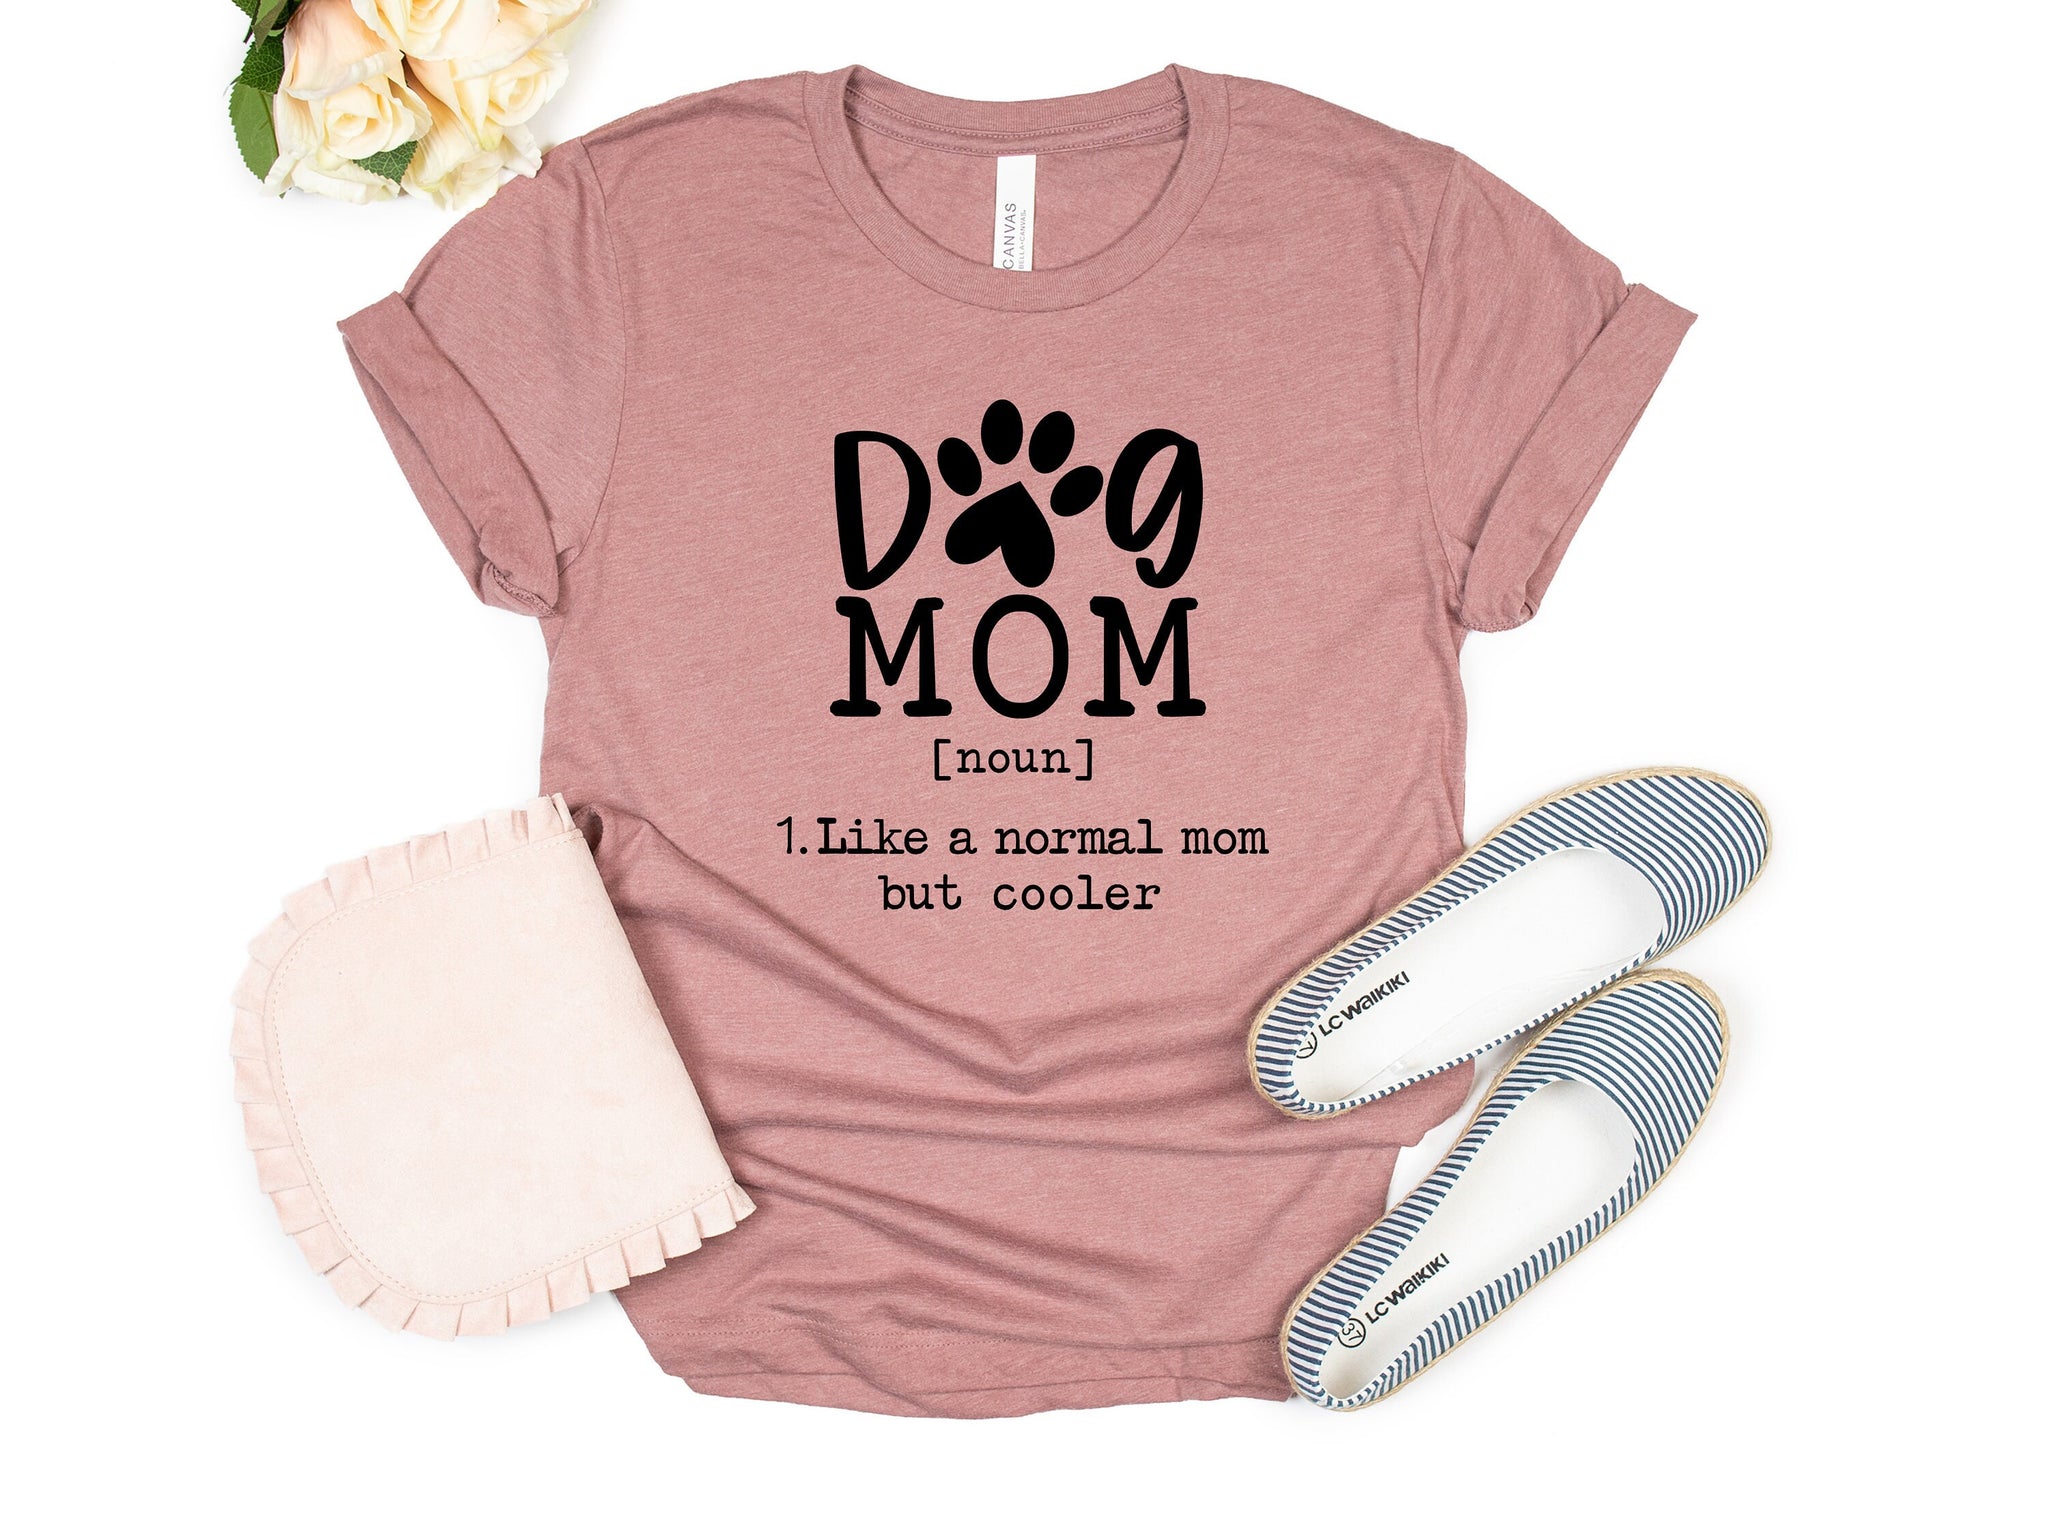 Dog Mom Noun Shirt, Dog Mom Like a Normal Mom But Cooler Funny Shirt, Unisex Cute Shirt, Dog Mom Shirt